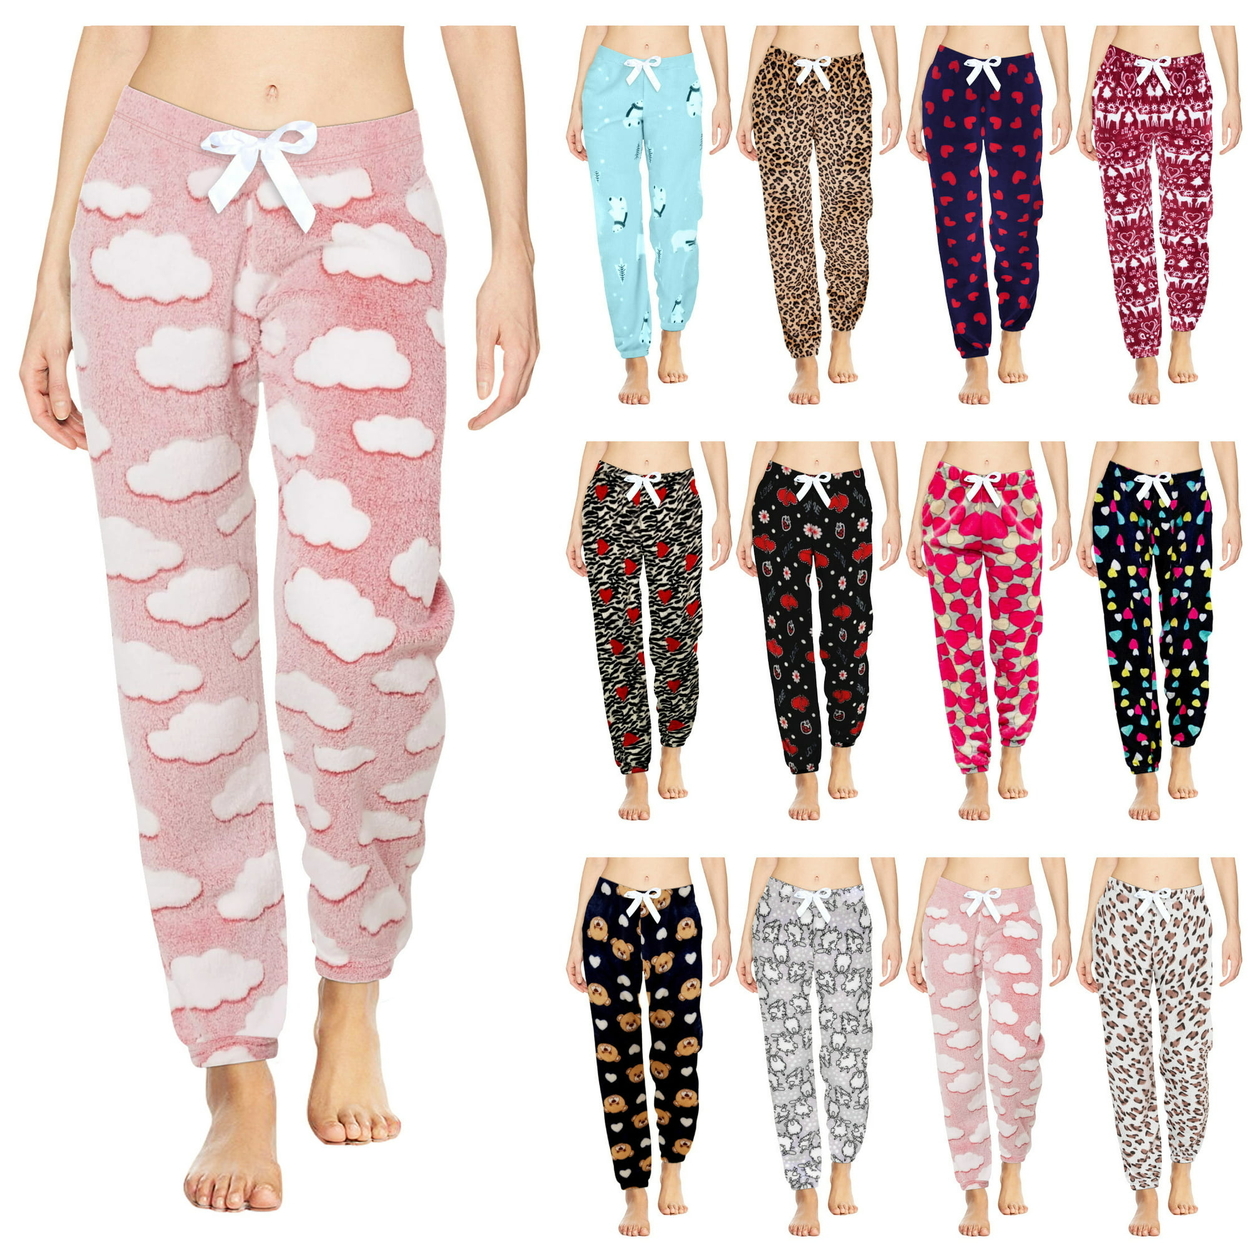 3-Pack: Women's Solid & Printed Ultra-Soft Comfy Stretch Micro-Fleece Pajama Lounge Pants - Medium, Love